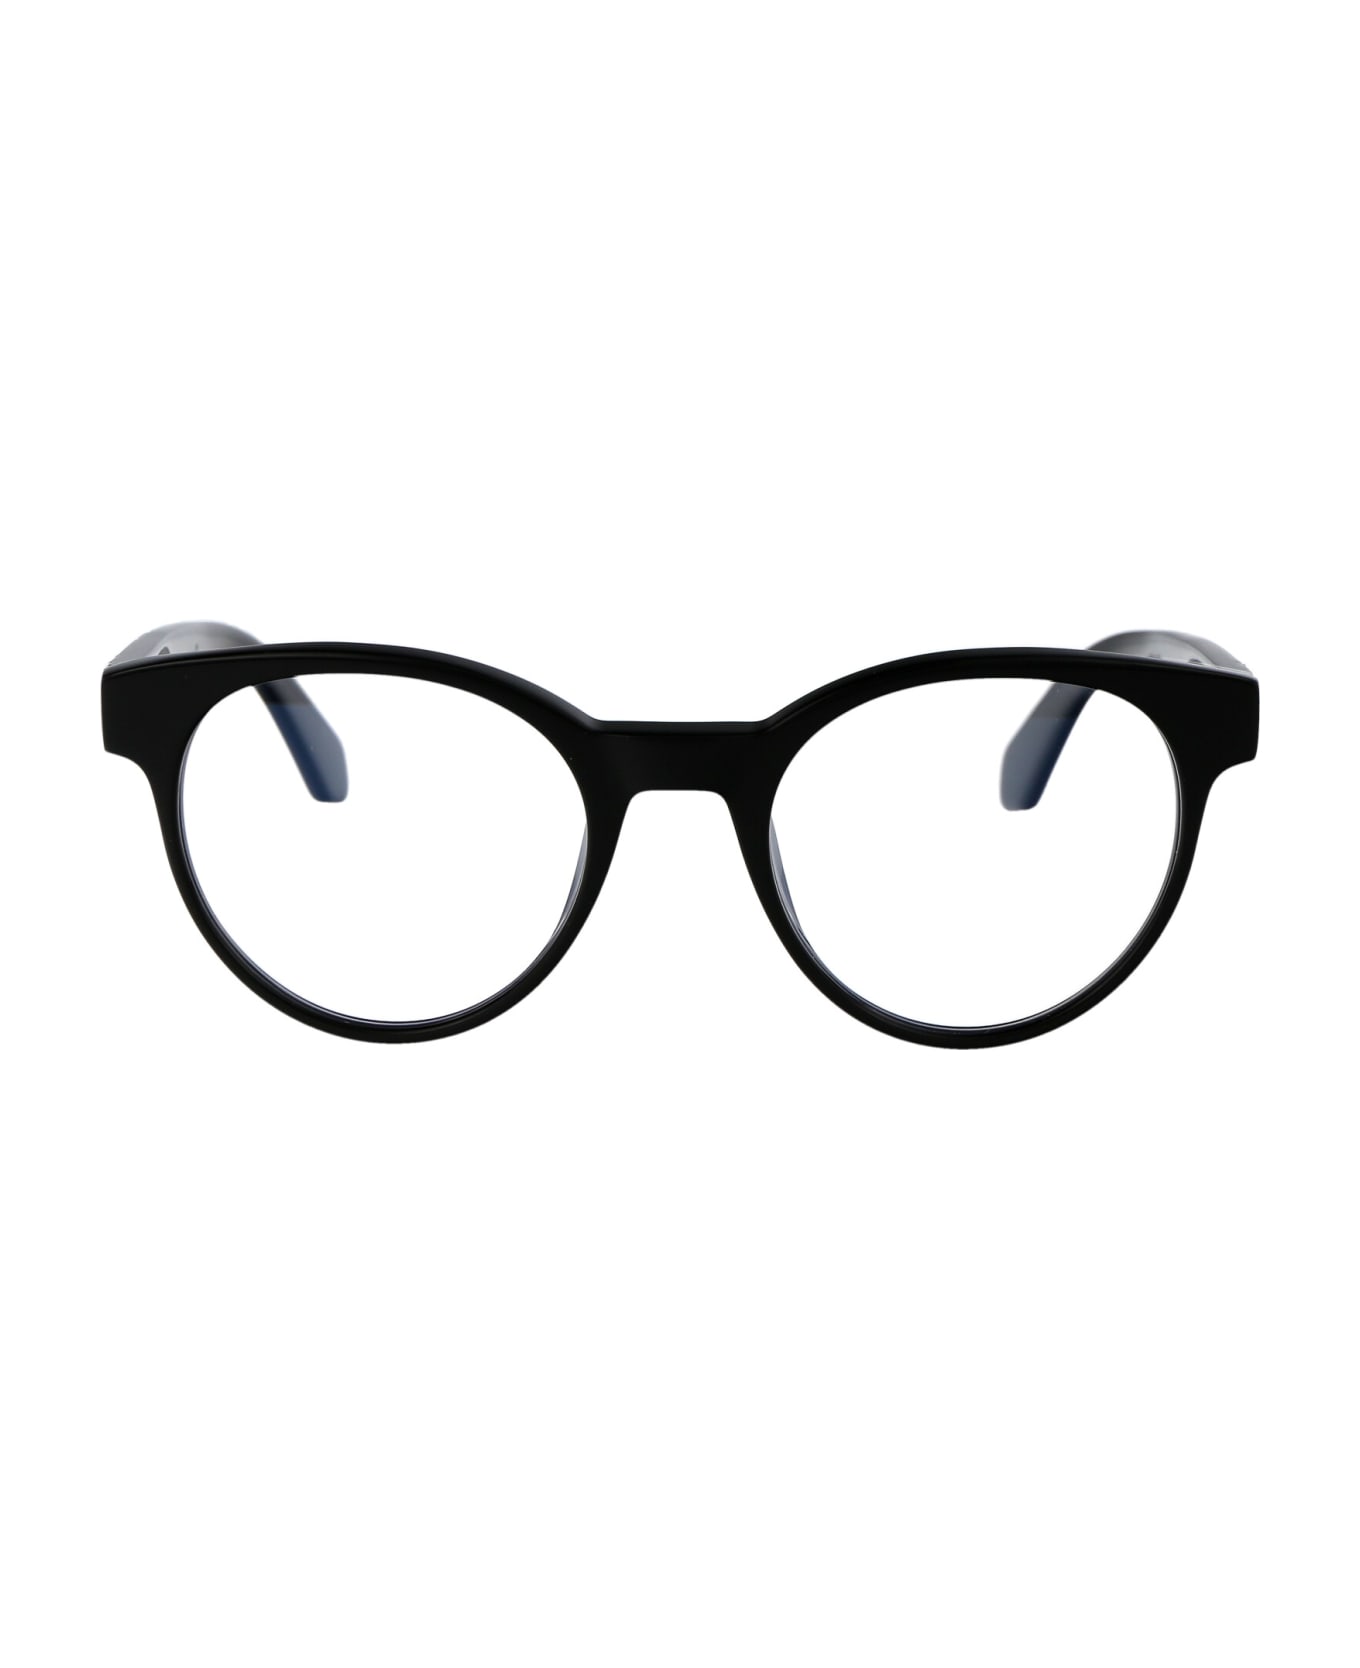 Off-White Optical Style 68 Glasses - 1000 BLACK